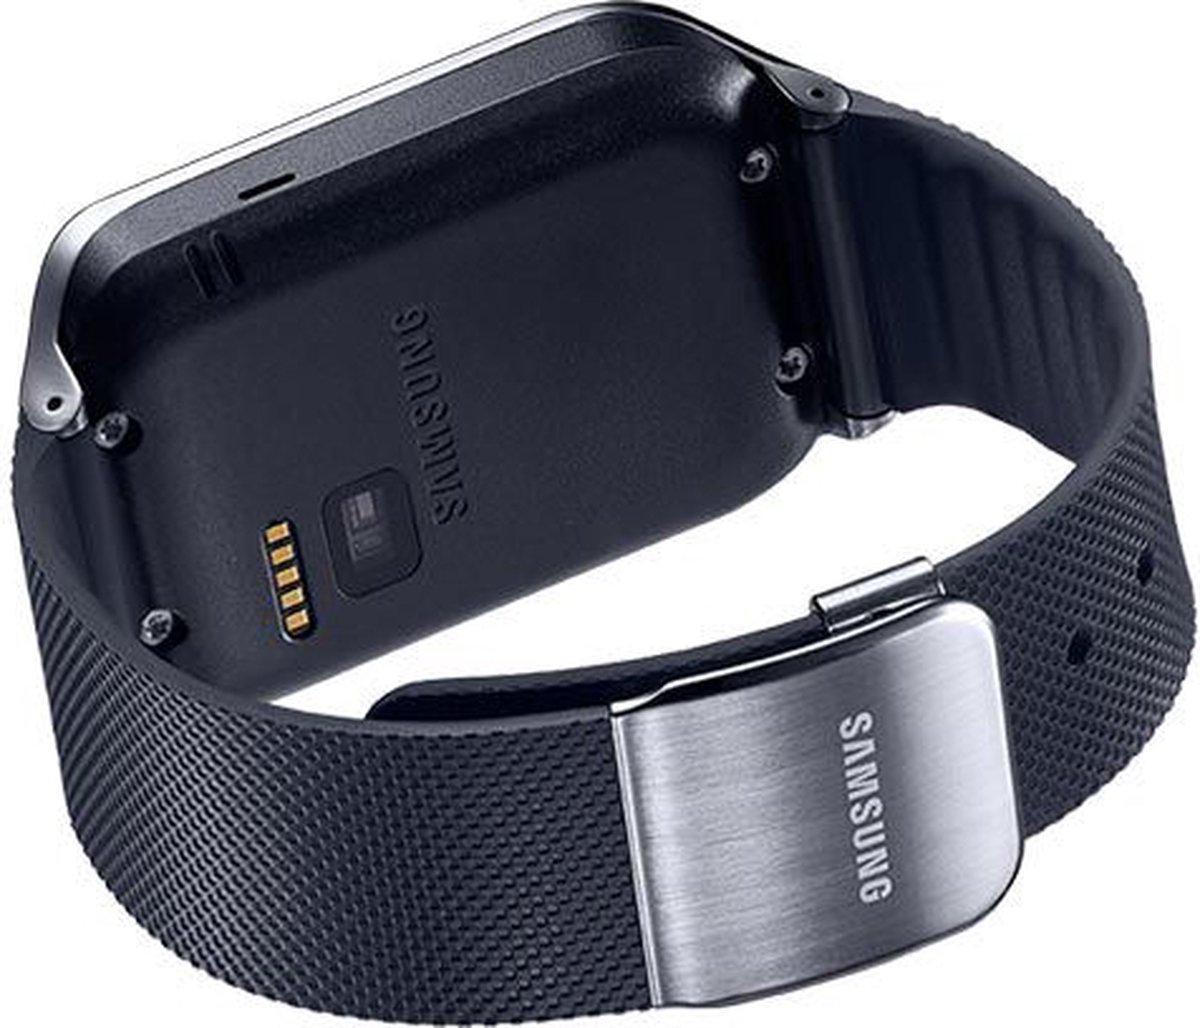 Waardeloos Typisch Vuiligheid Samsung Galaxy Gear 2 Neo smartwatch - Zwart met siliconen band 2 | bol.com